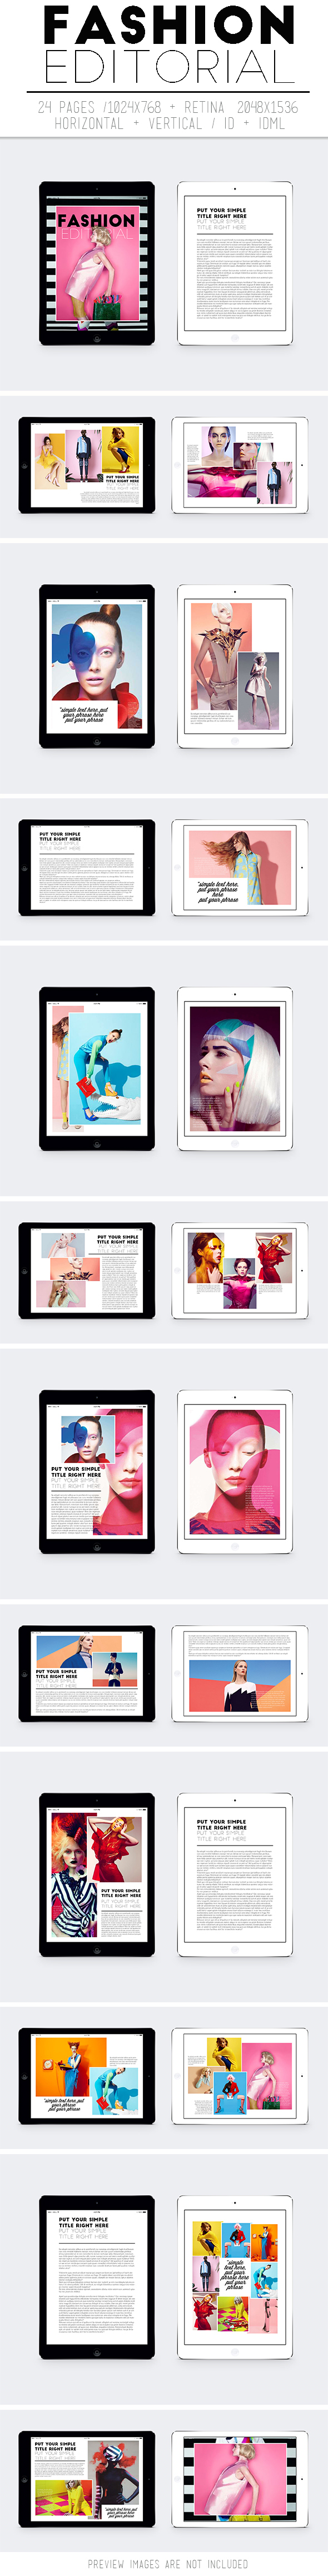 simple tablet iPad magazine editorial clean elegant model template retina horizontal vertical Layout lifestyle makeup